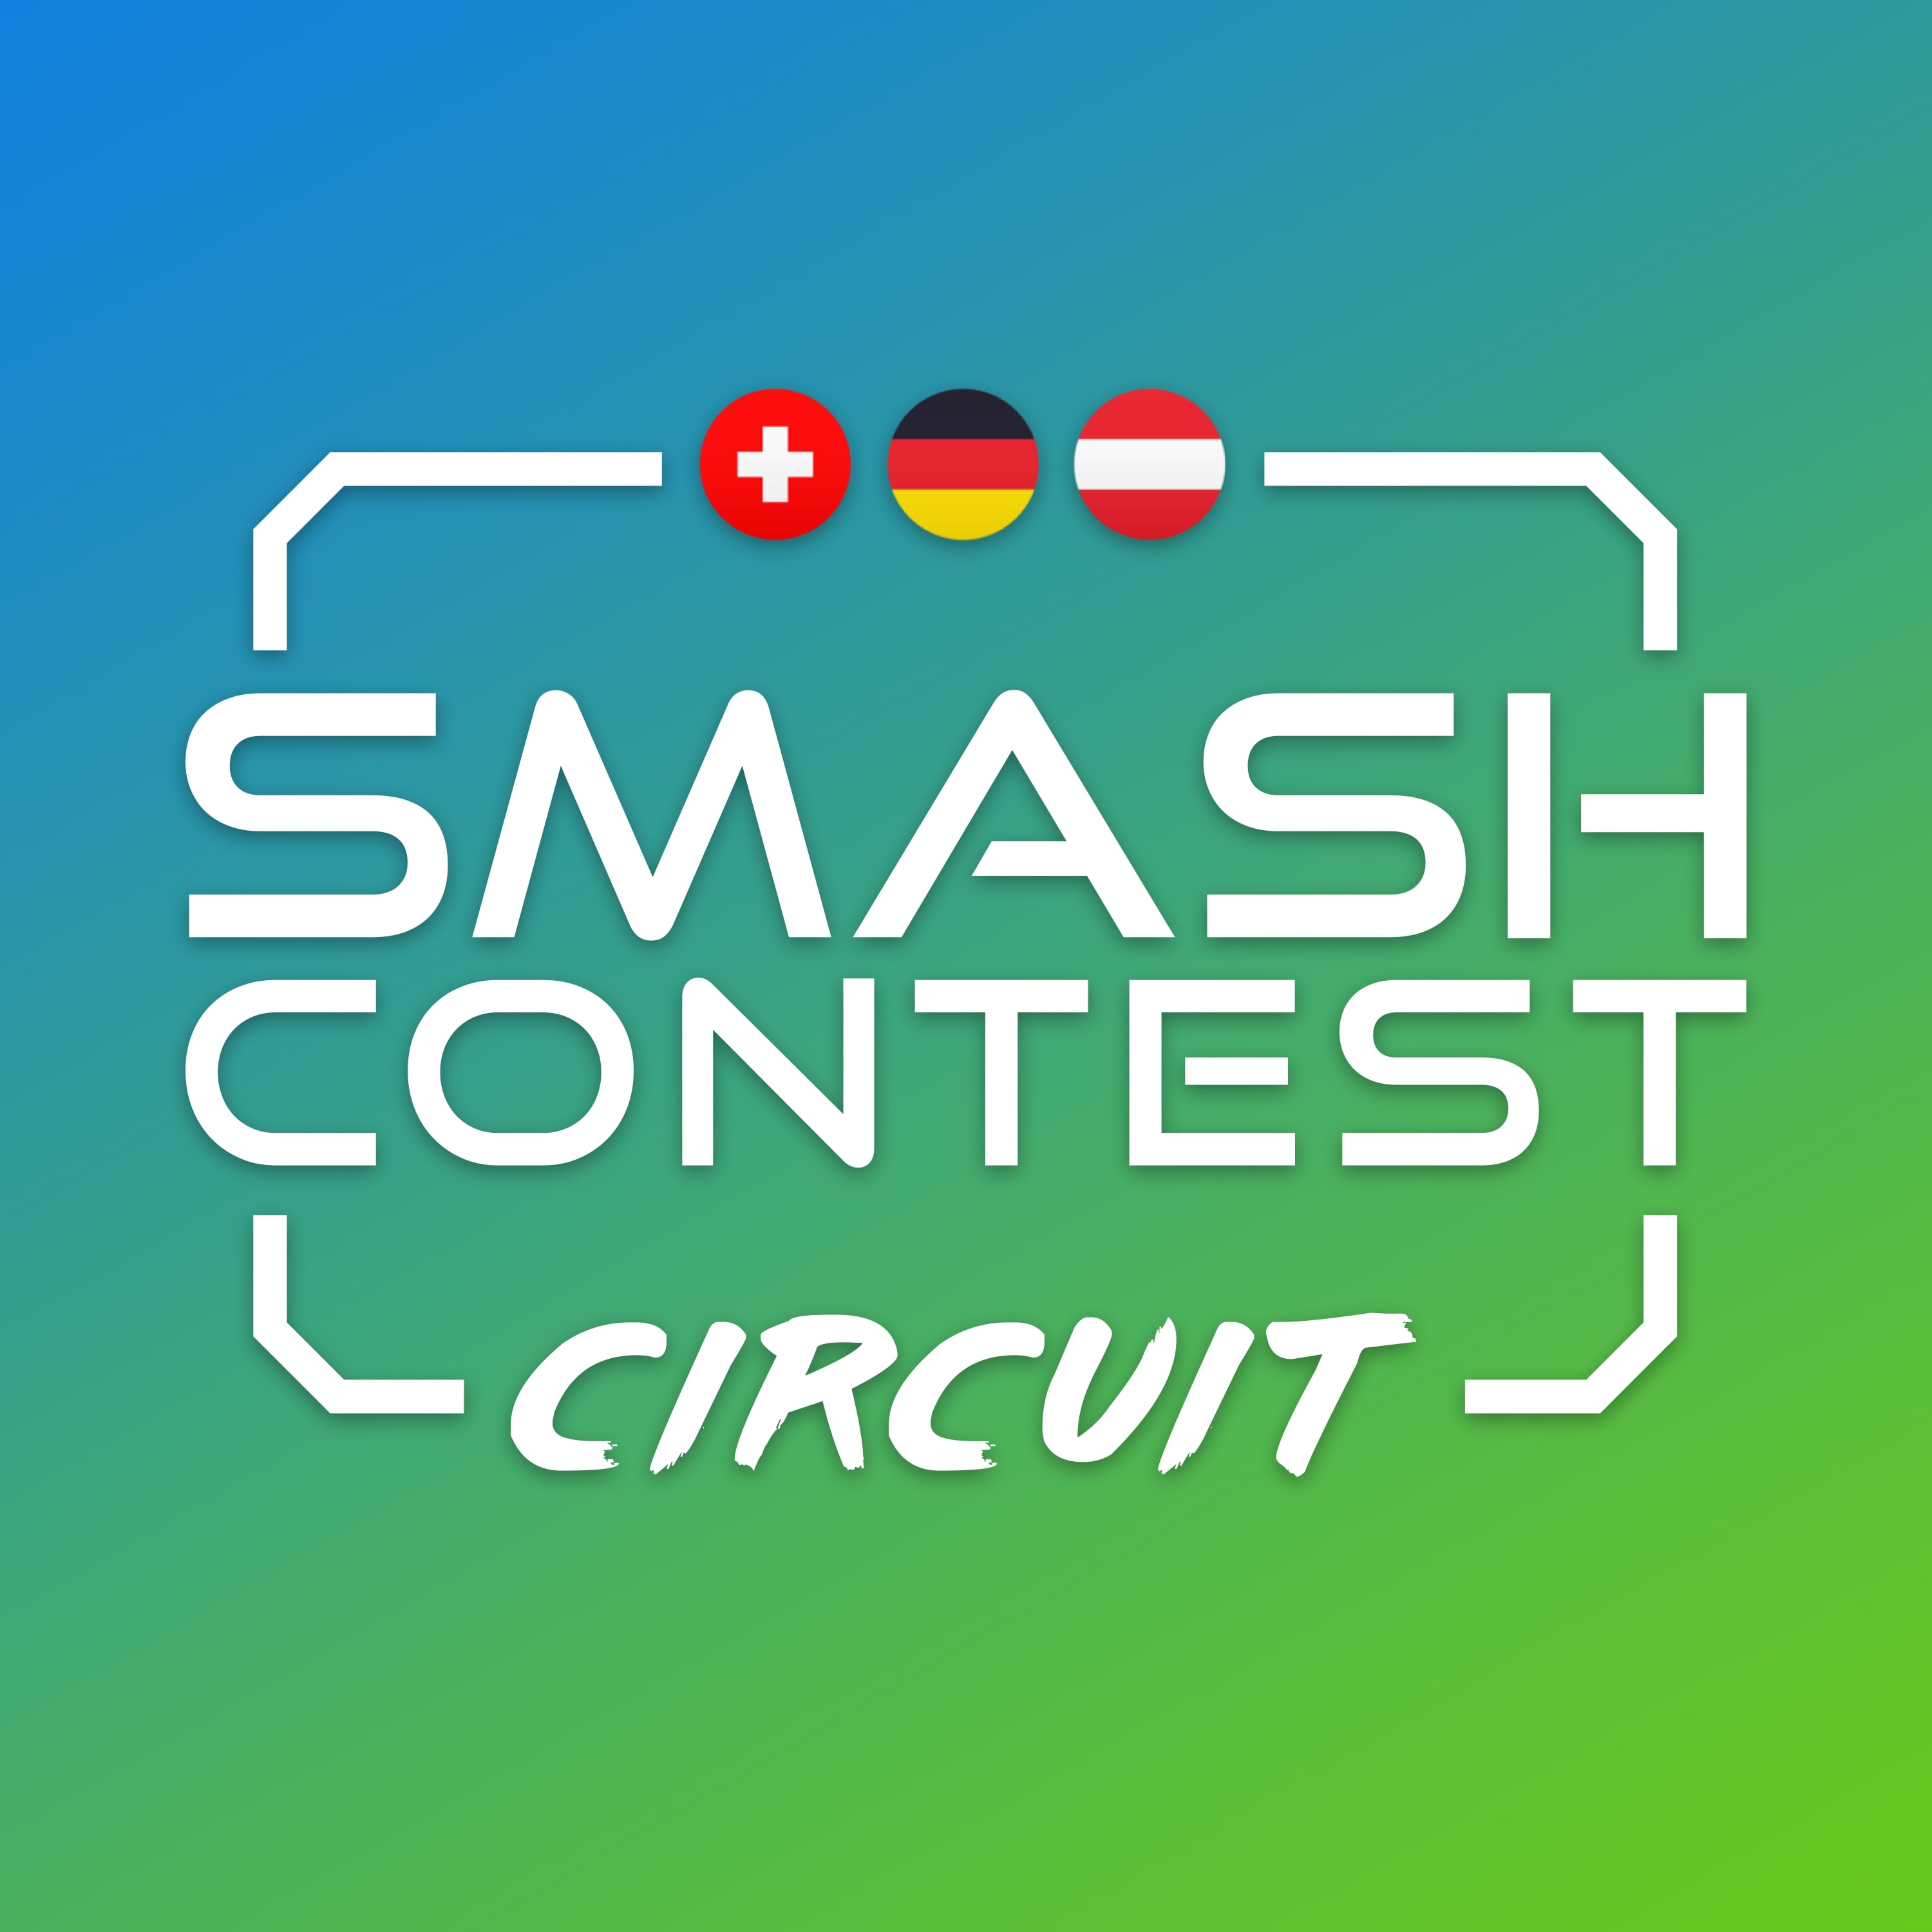 smash contest circuit image